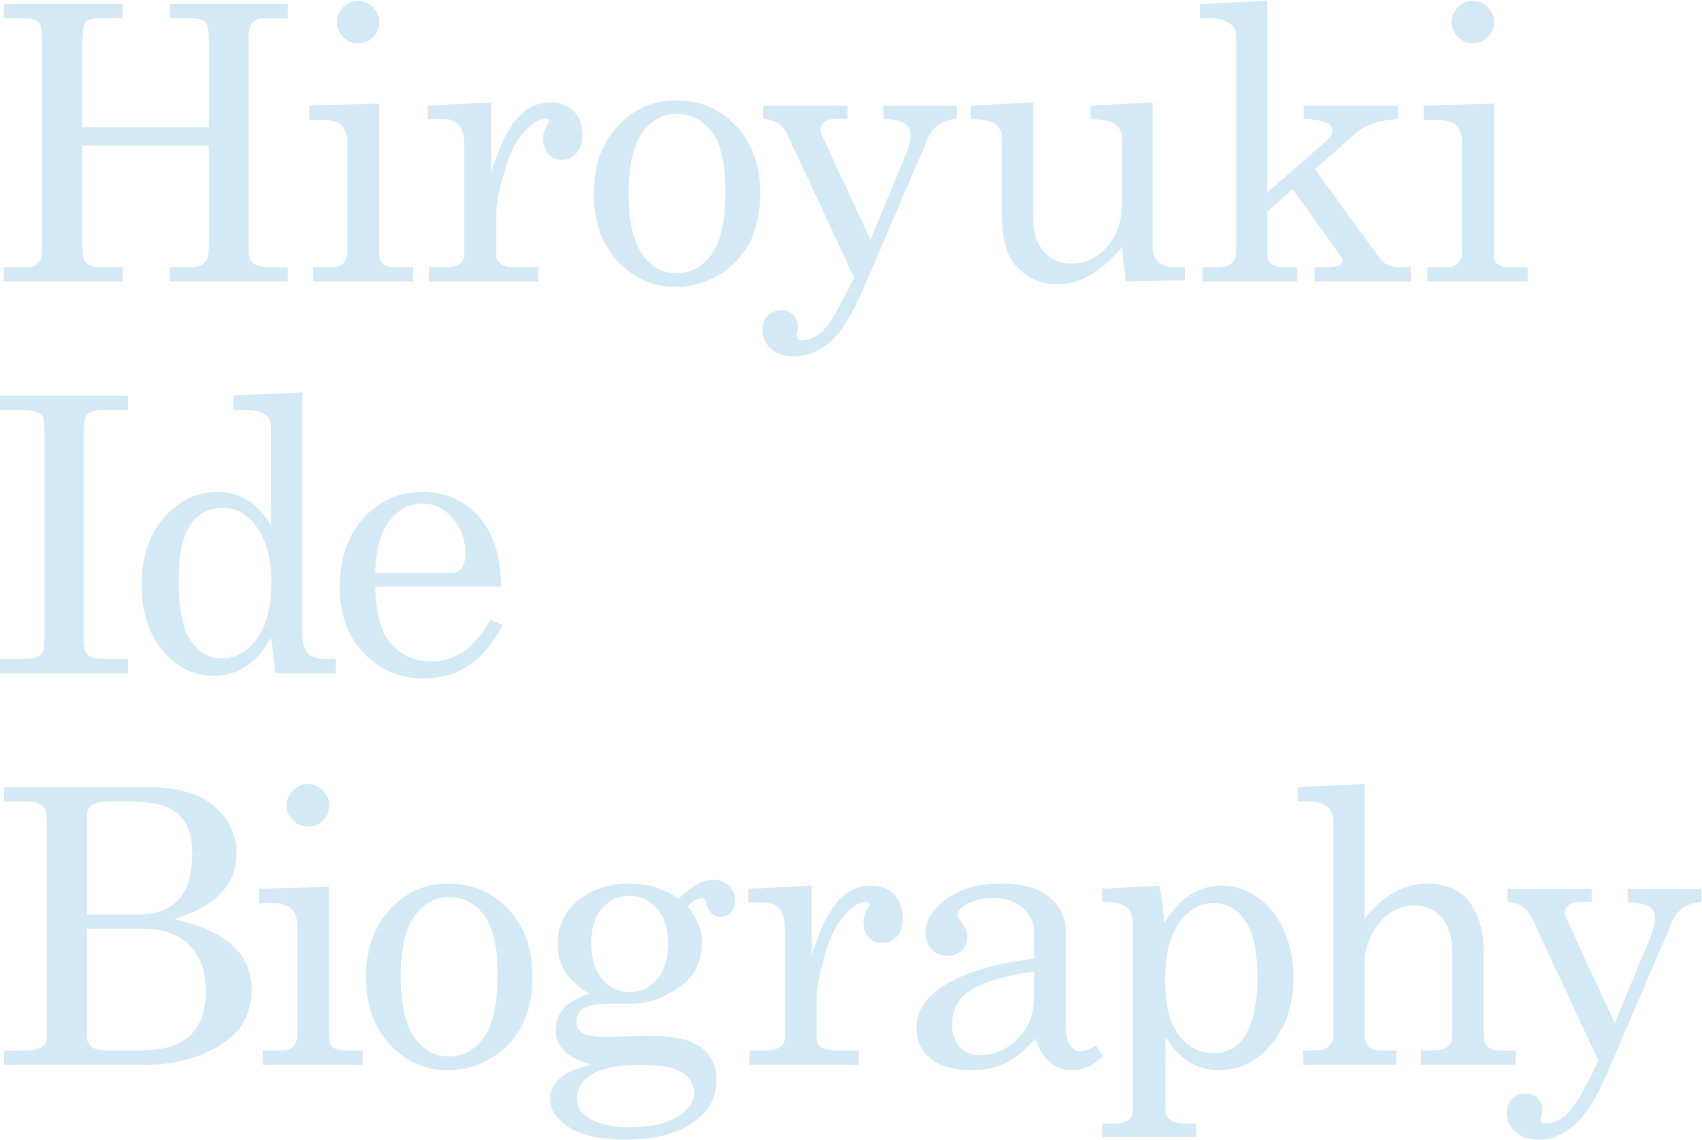 hiroyuki ide biography